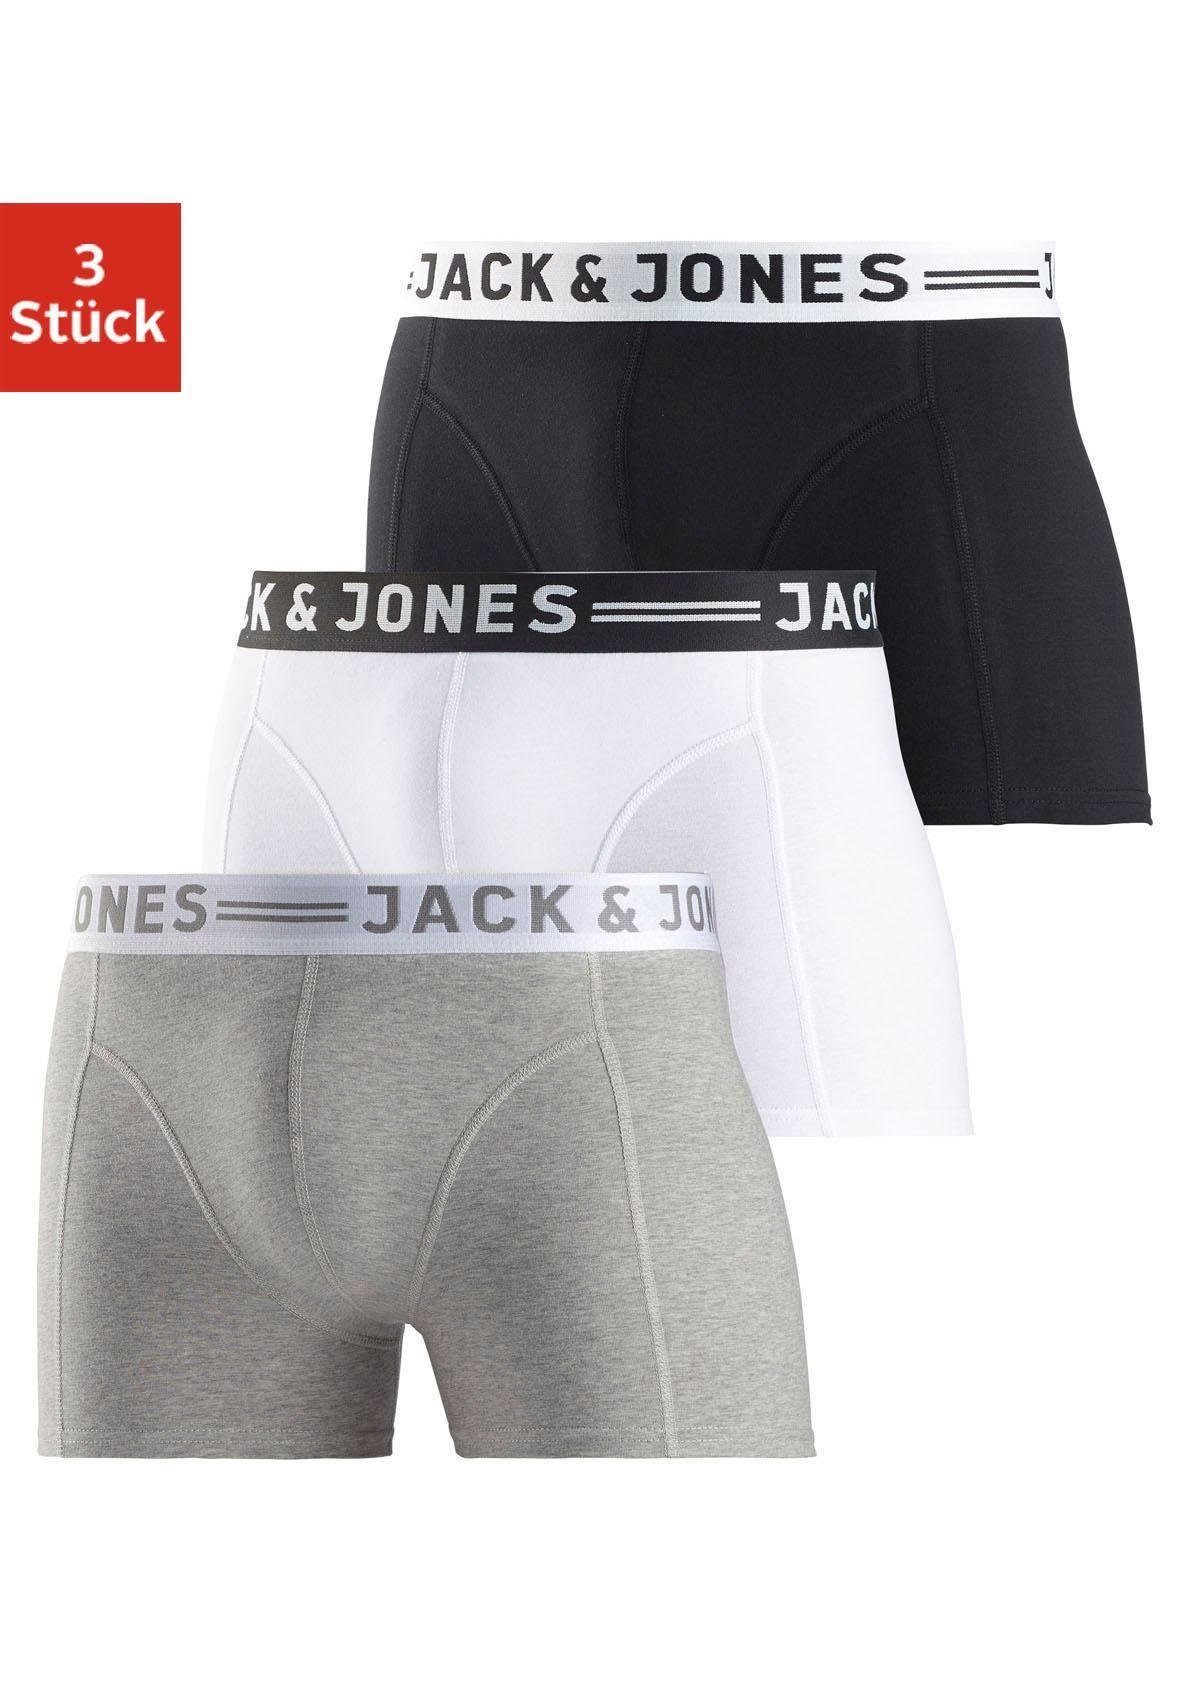 Jack & Jones Boxer (Packung, weiß, 3-St) Trunks grau-meliert Sense schwarz